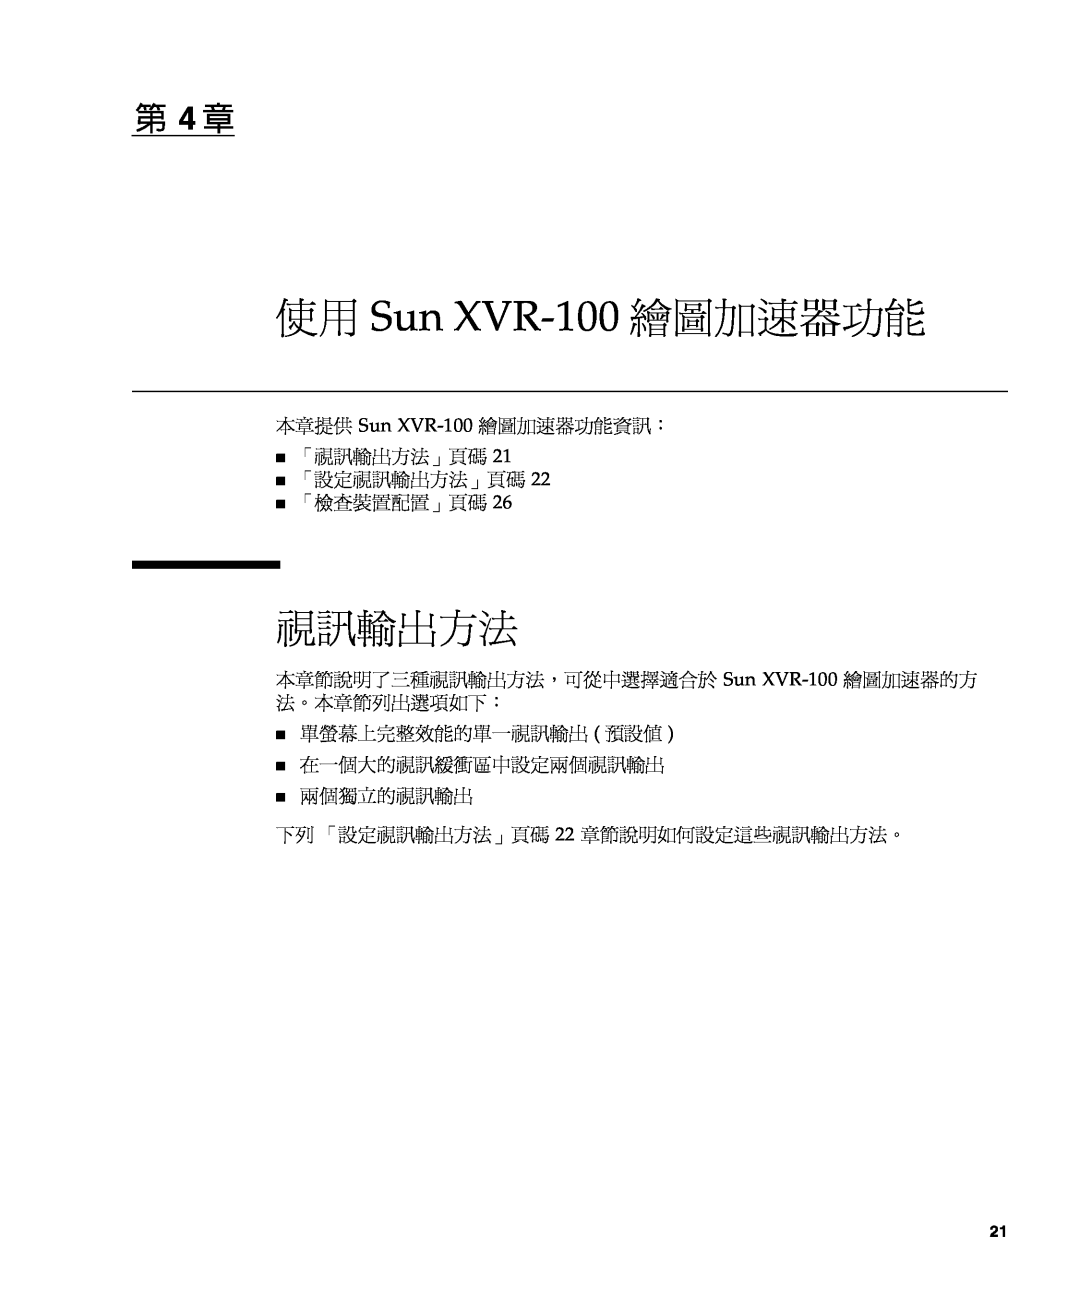 Sun Microsystems 使用 Sun XVR-100 繪圖加速器功能, 第 4 章, 本章提供 Sun XVR-100 繪圖加速器功能資訊： 「視訊輸出方法」頁碼 「設定視訊輸出方法」頁碼 「檢查裝置配置」頁碼 